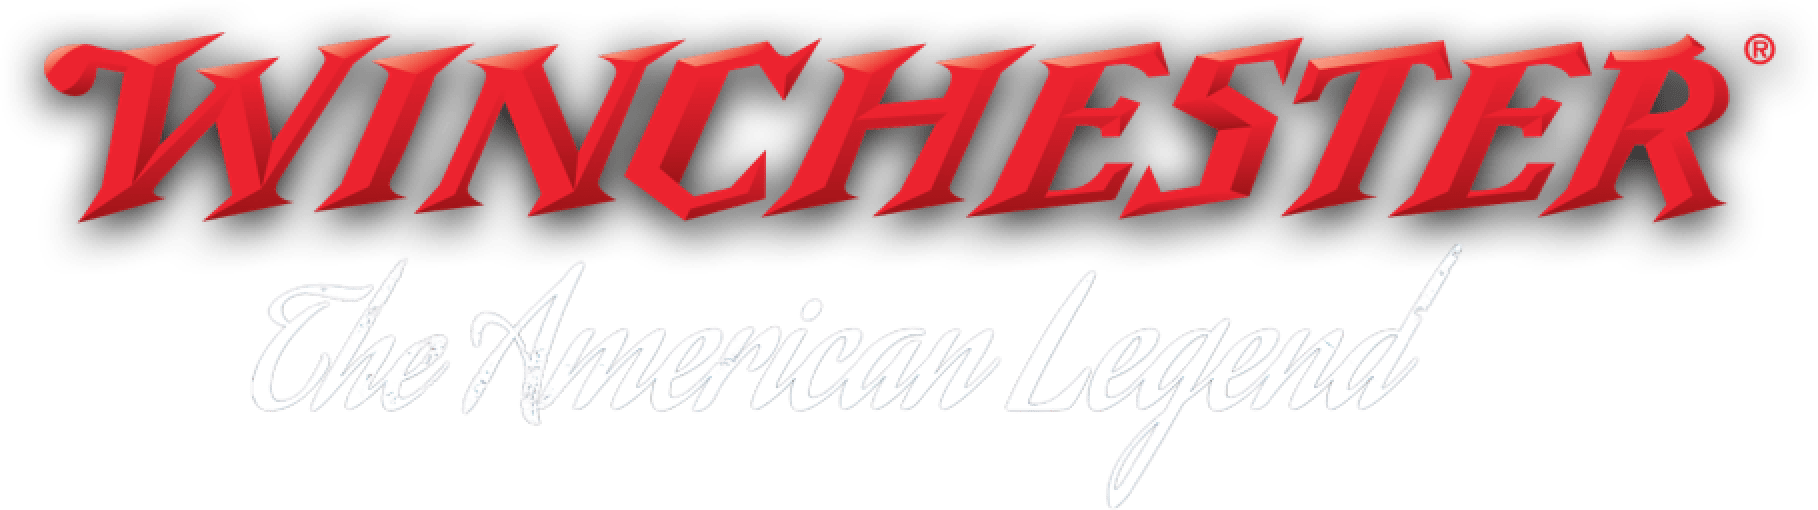 Winchester - The American Legend